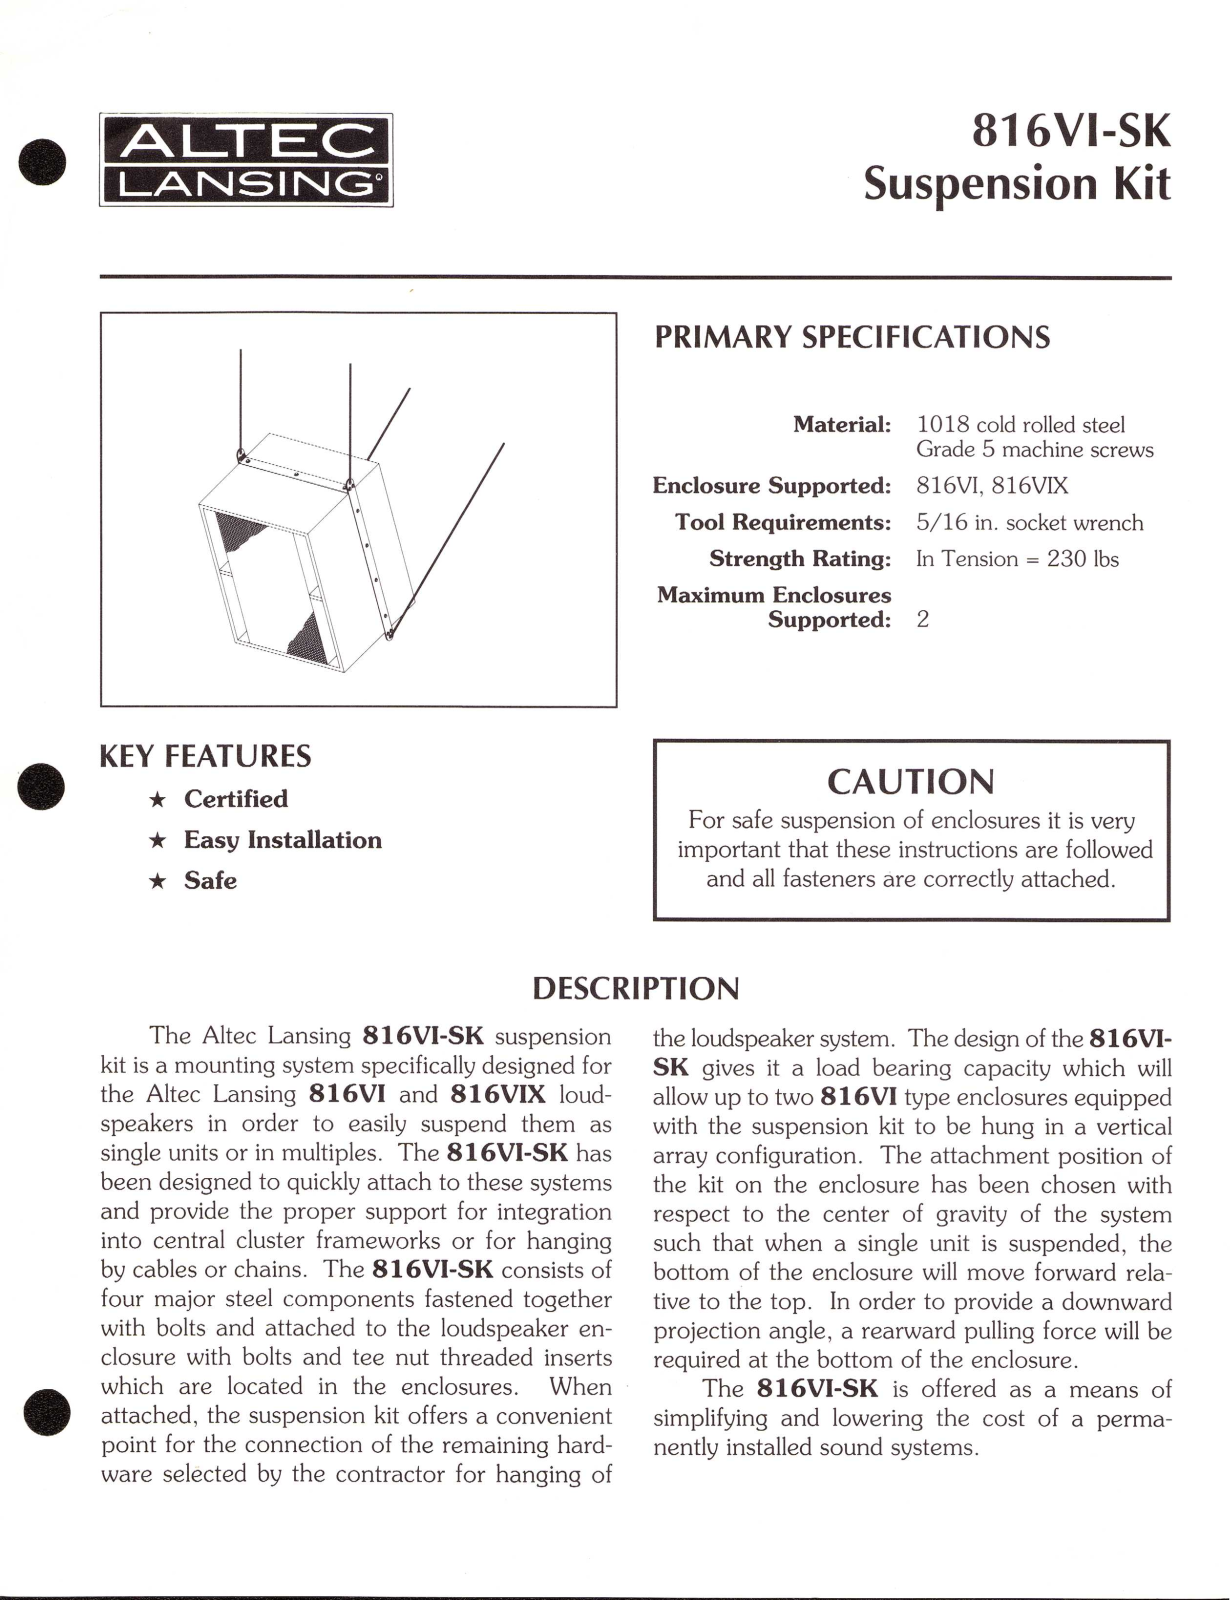 Altec lansing 816VI-SK User Manual